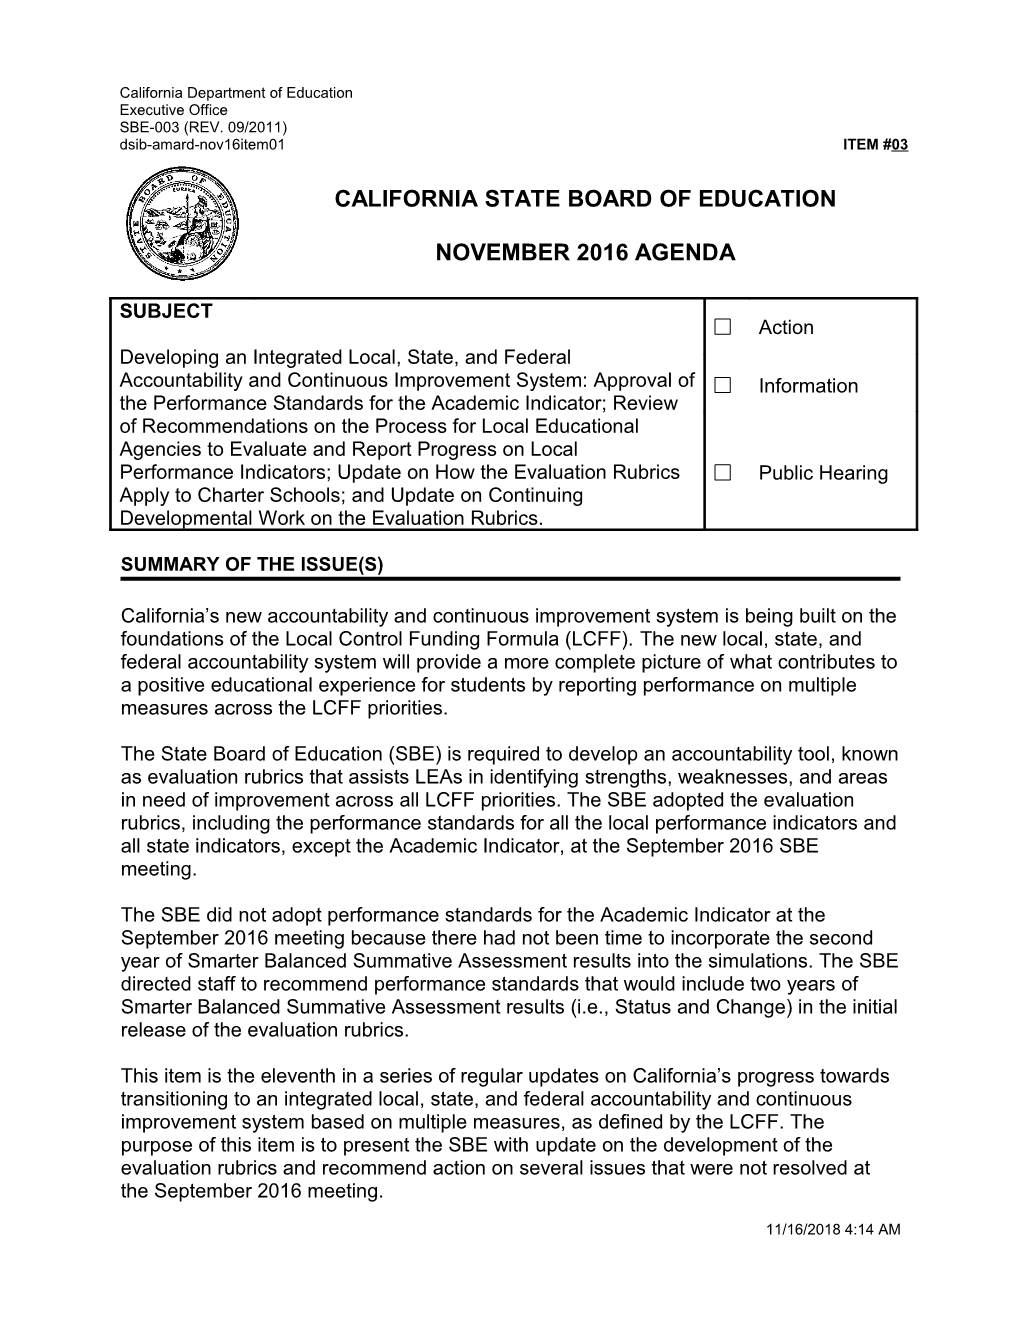 November 2016 Agenda Item 03 - Meeting Agendas (CA State Board of Education)